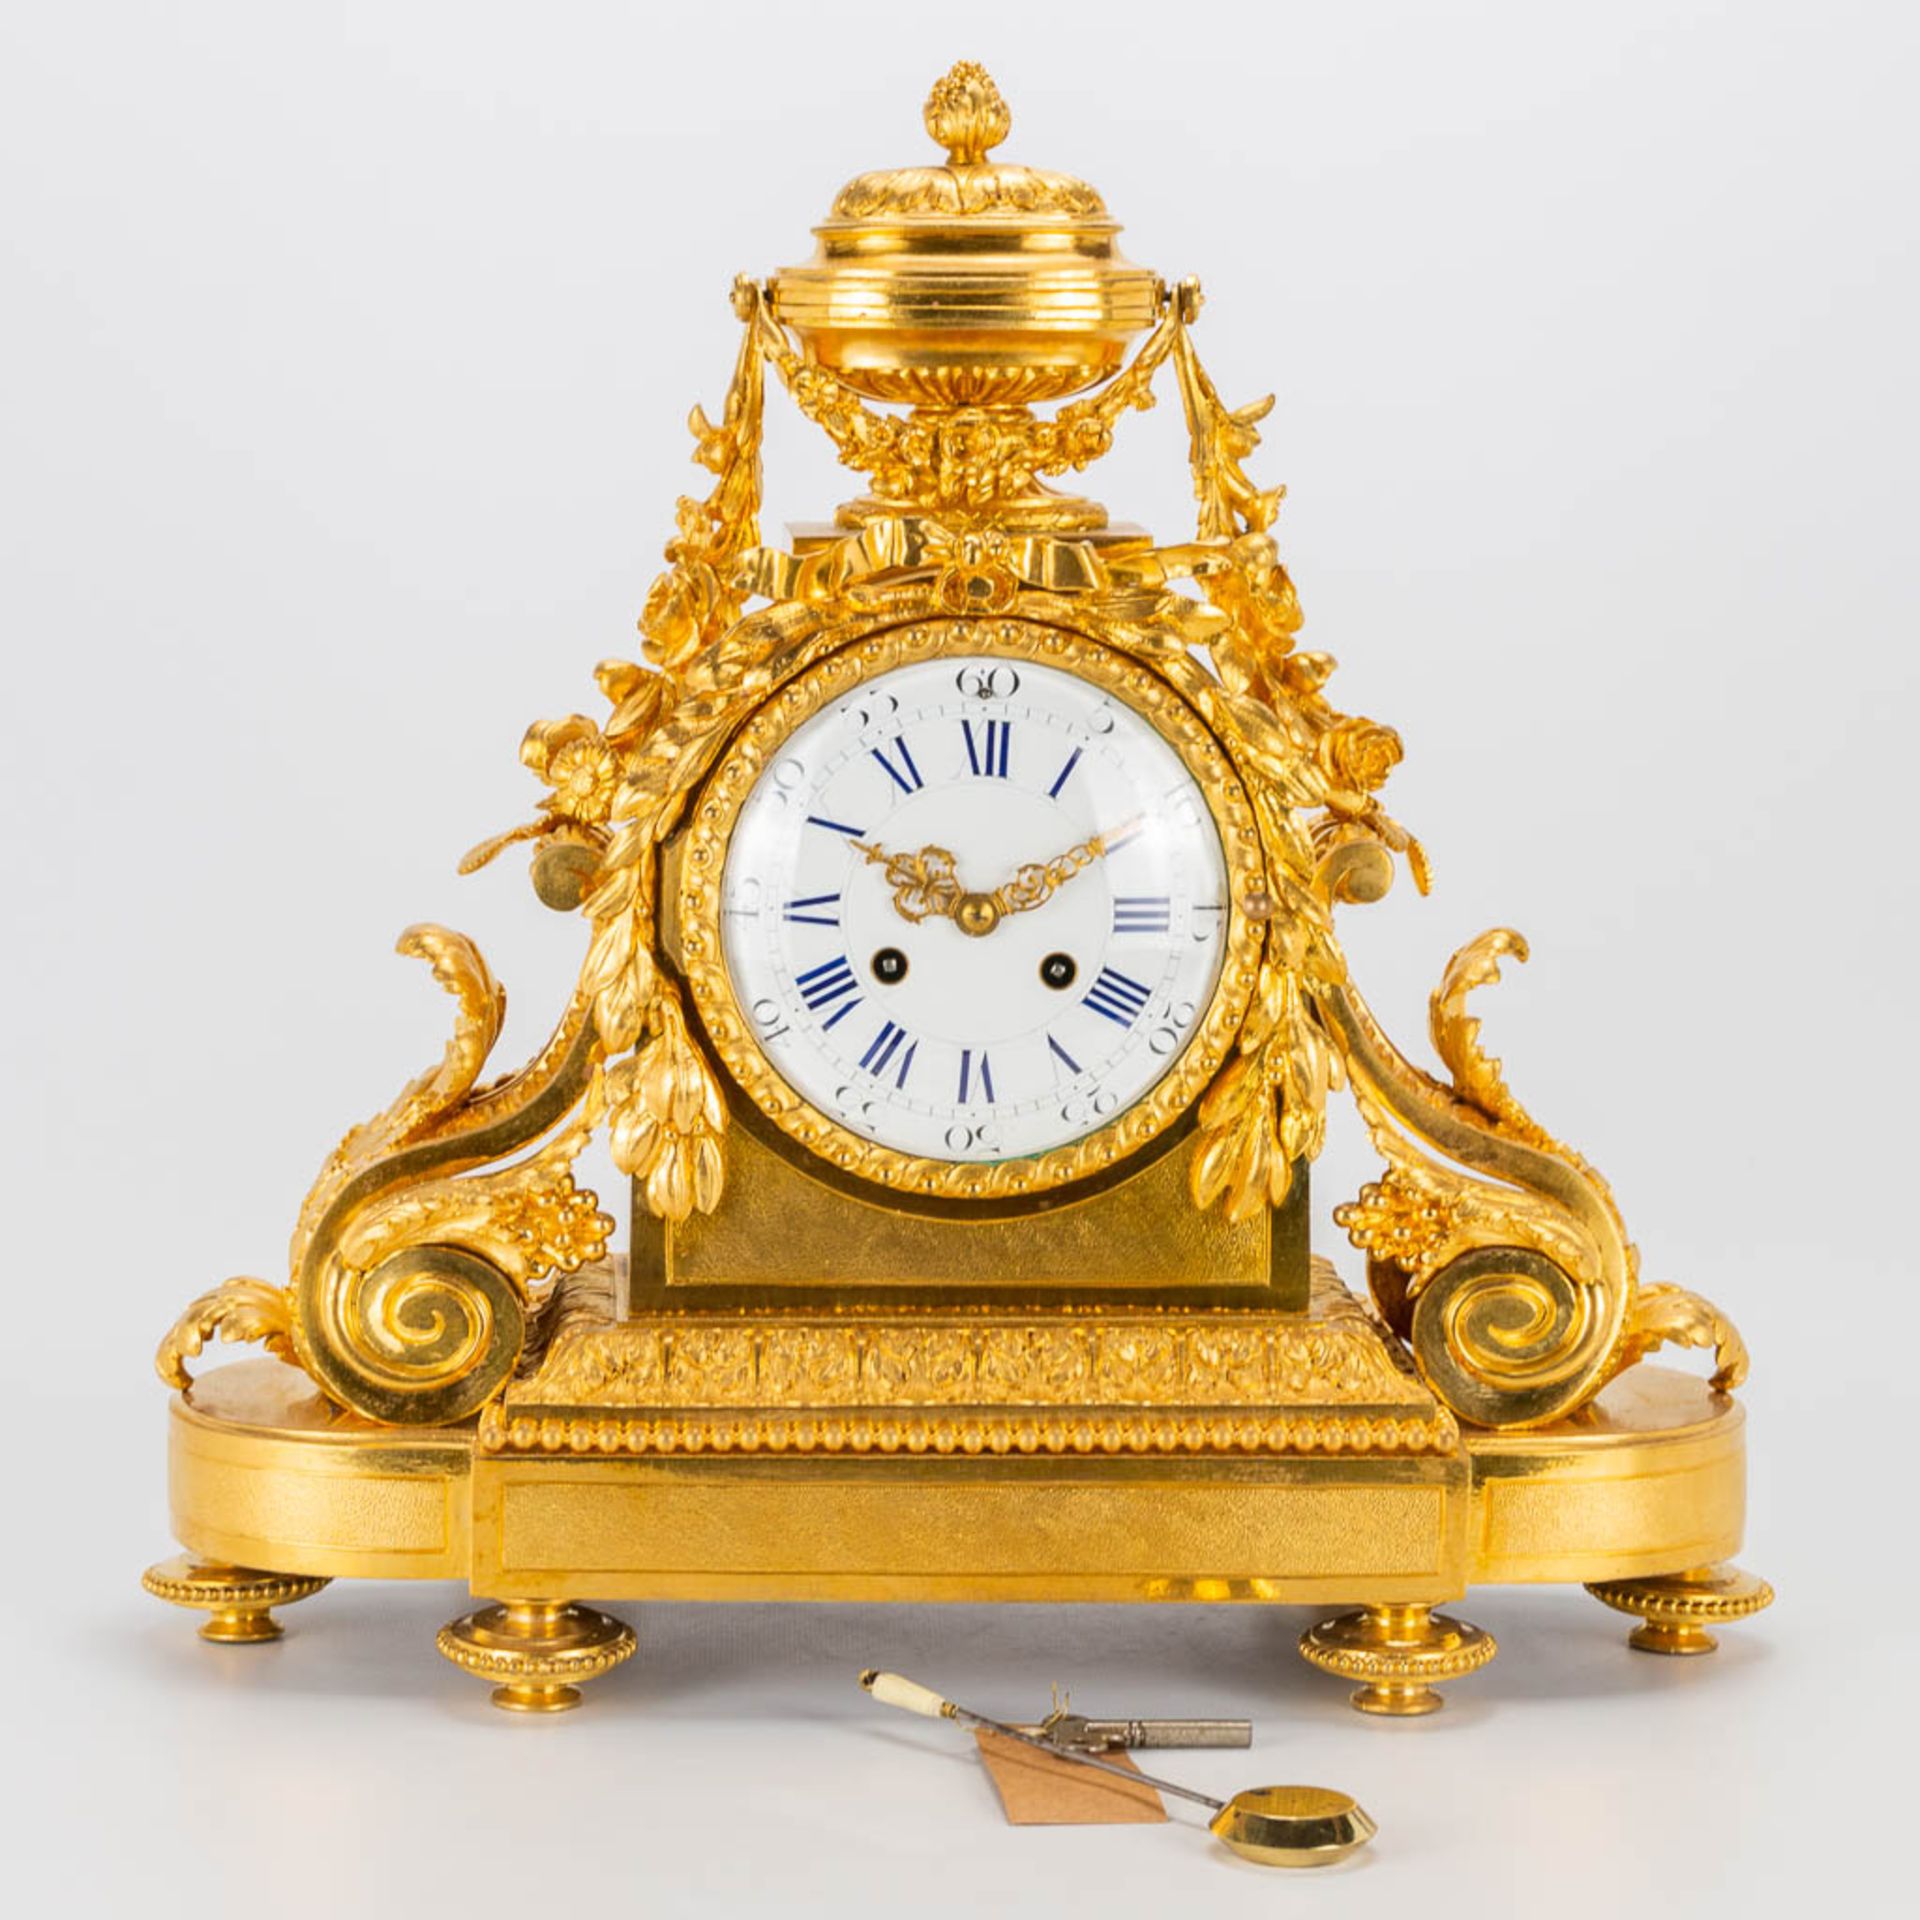 A bronze ormolu table clock made in Louis XVI style. 19th century. (15 x 41 x 42 cm)